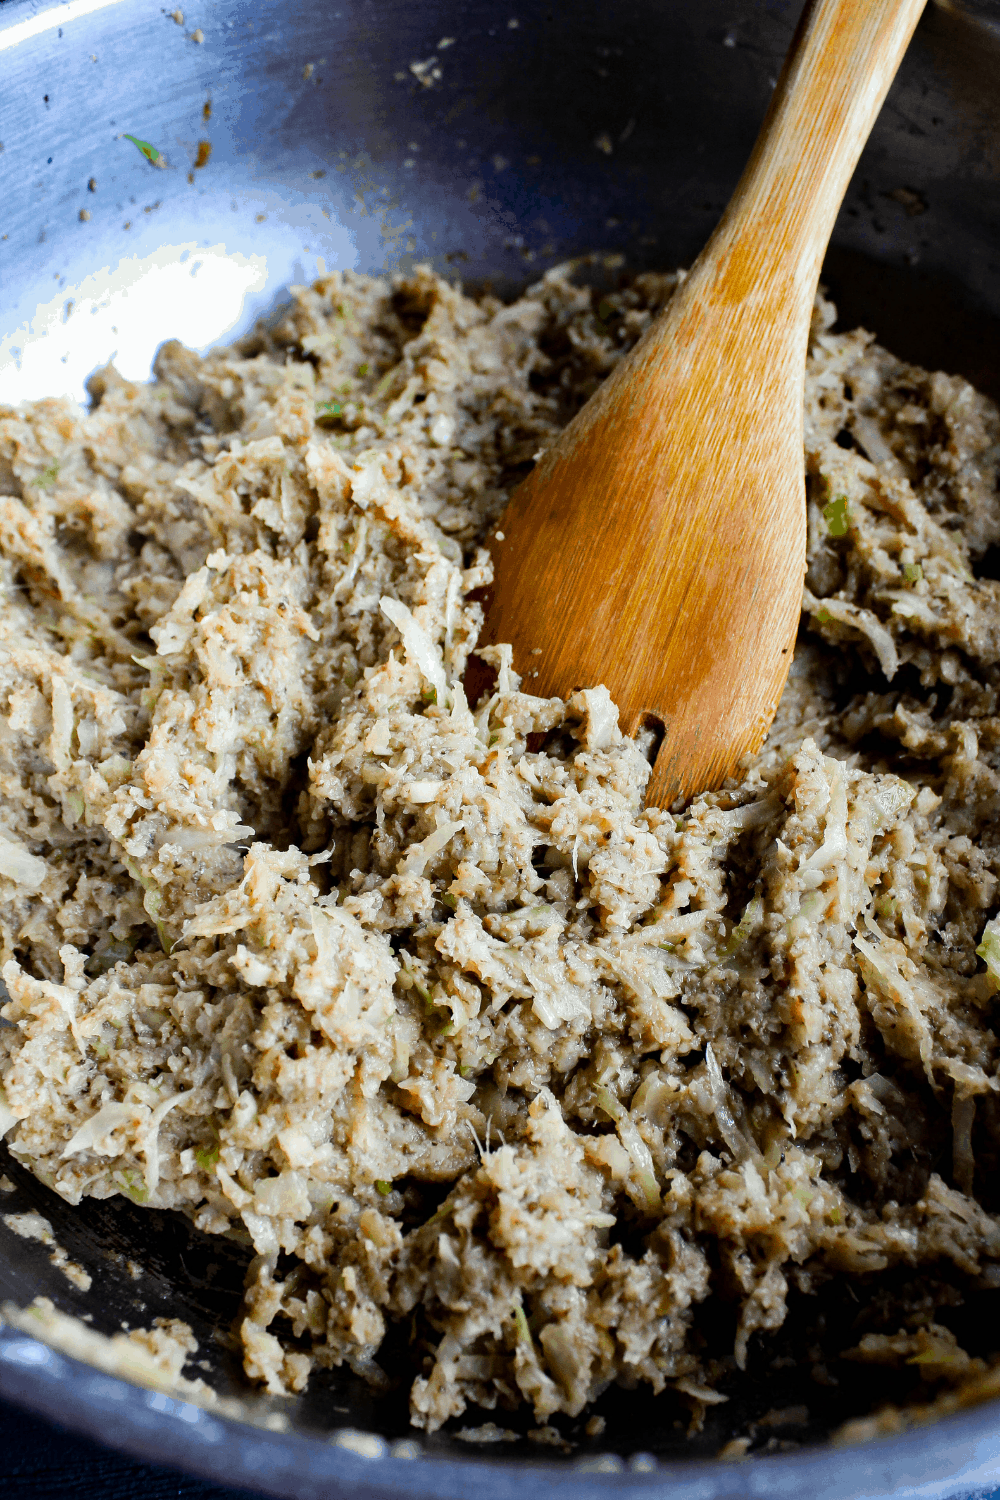 Dumpling filling in sauté pan with a wooden spoon.